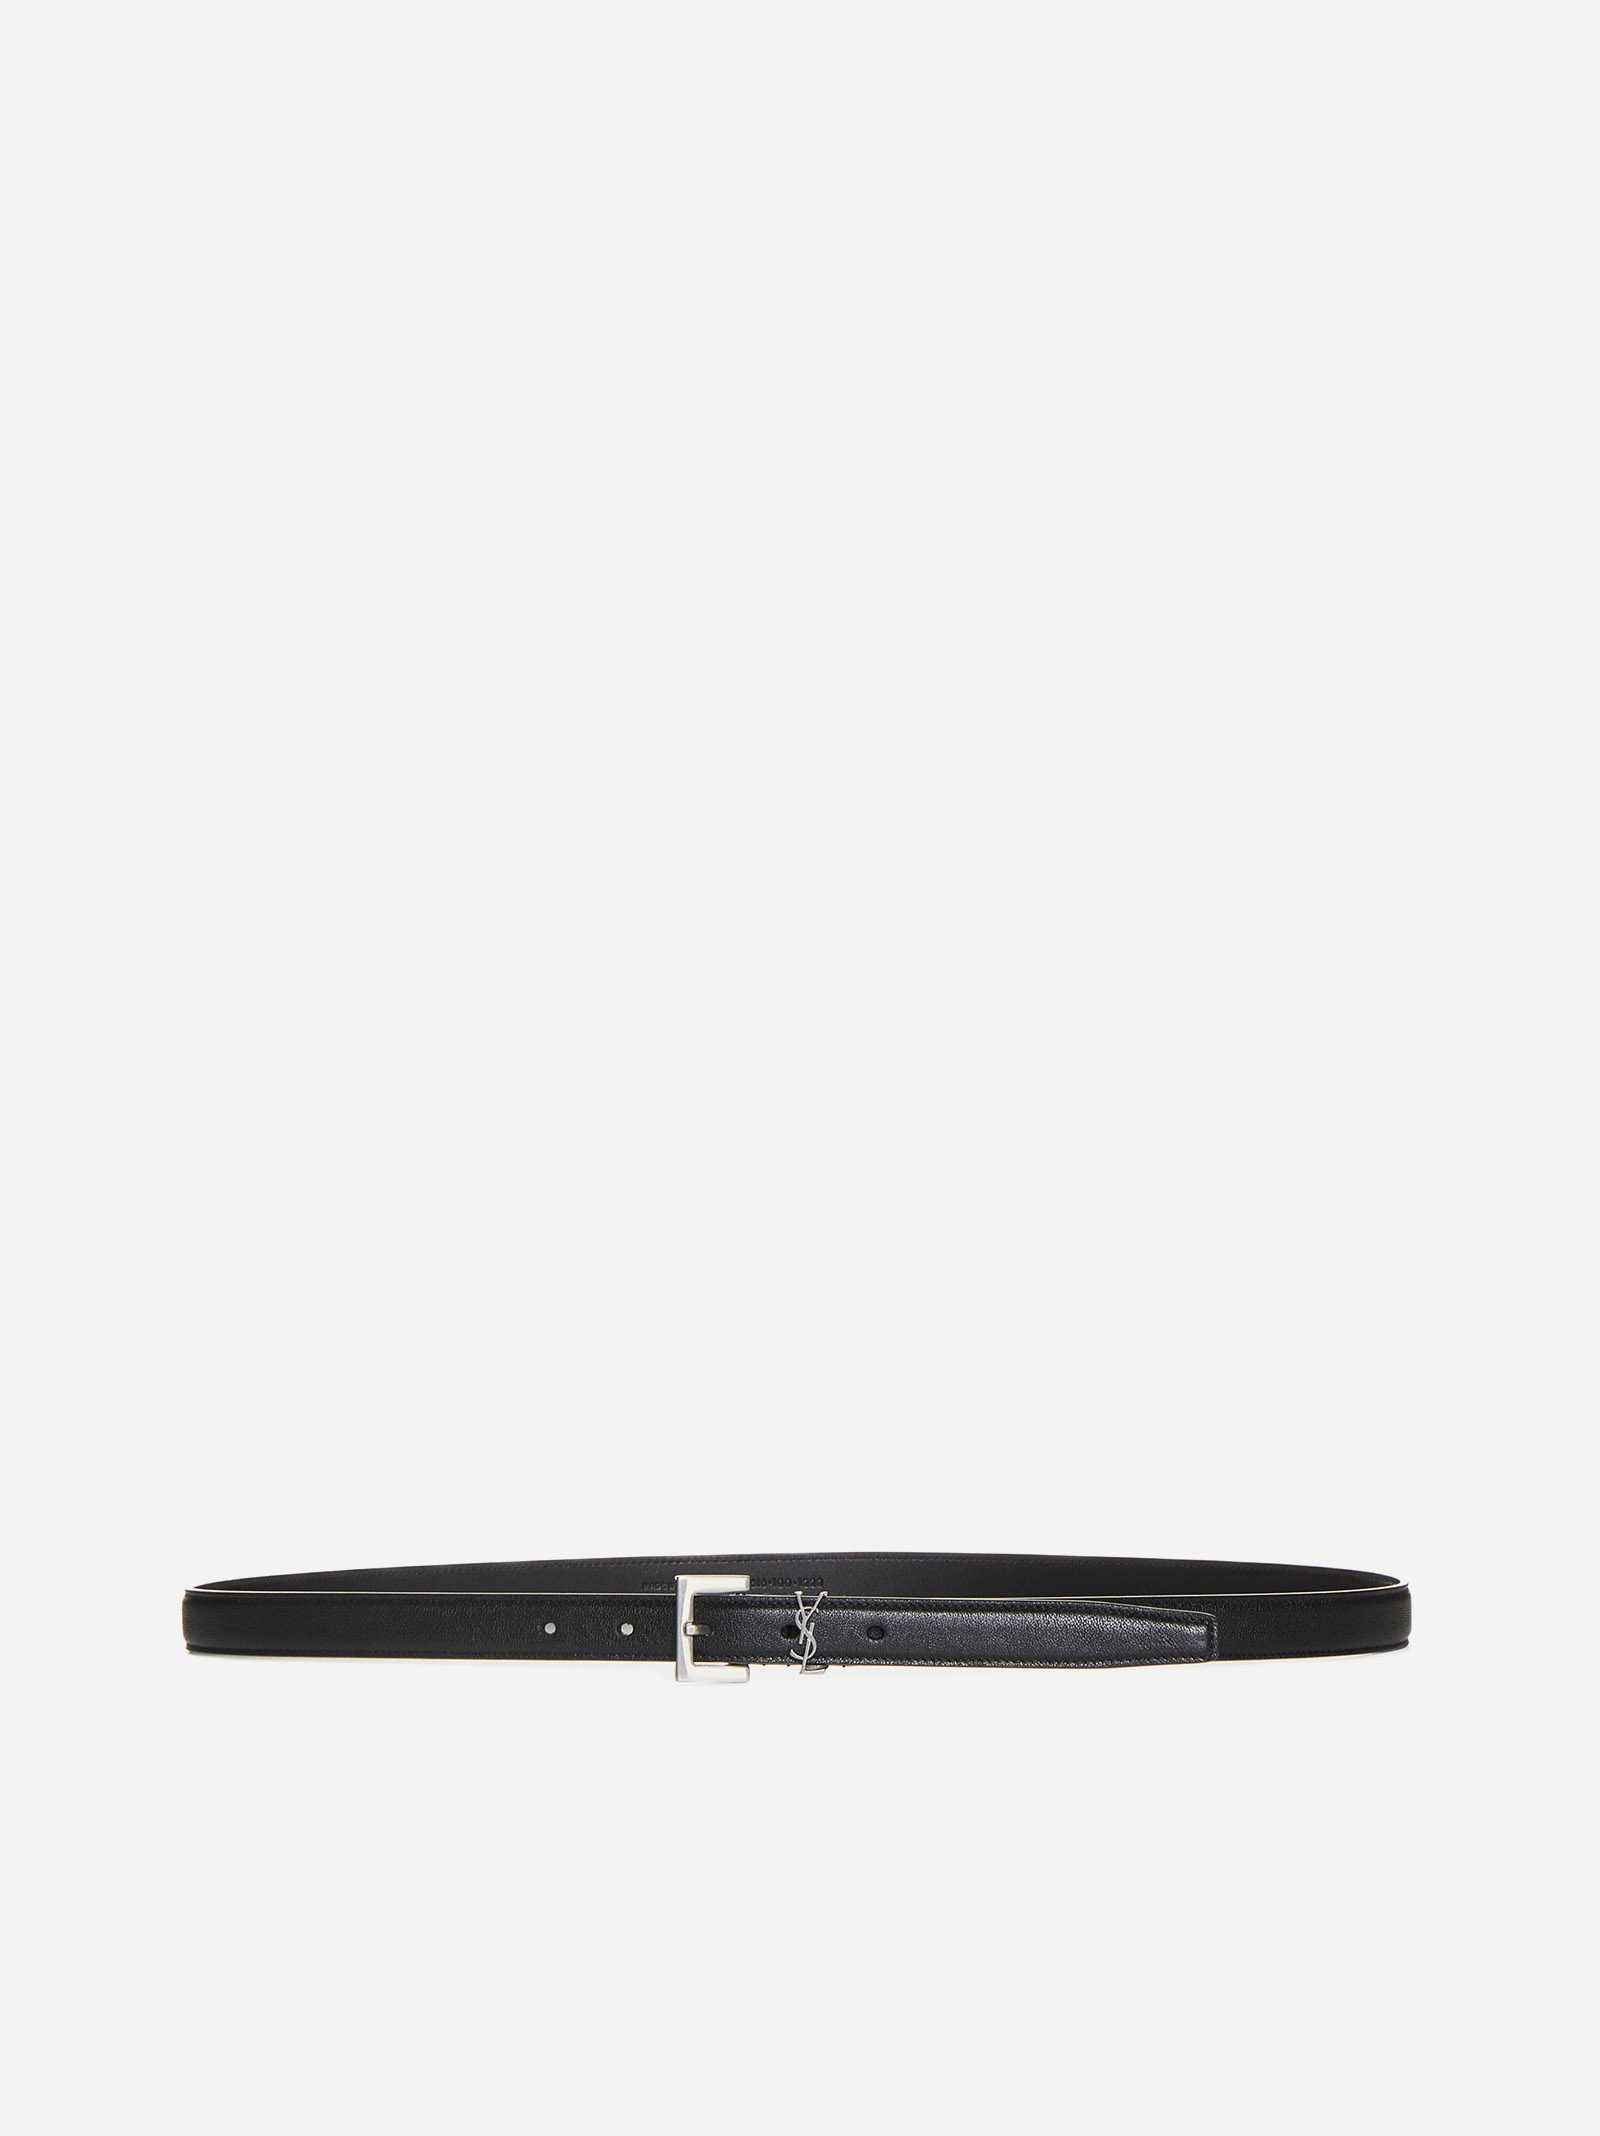 YSL leather belt - 1